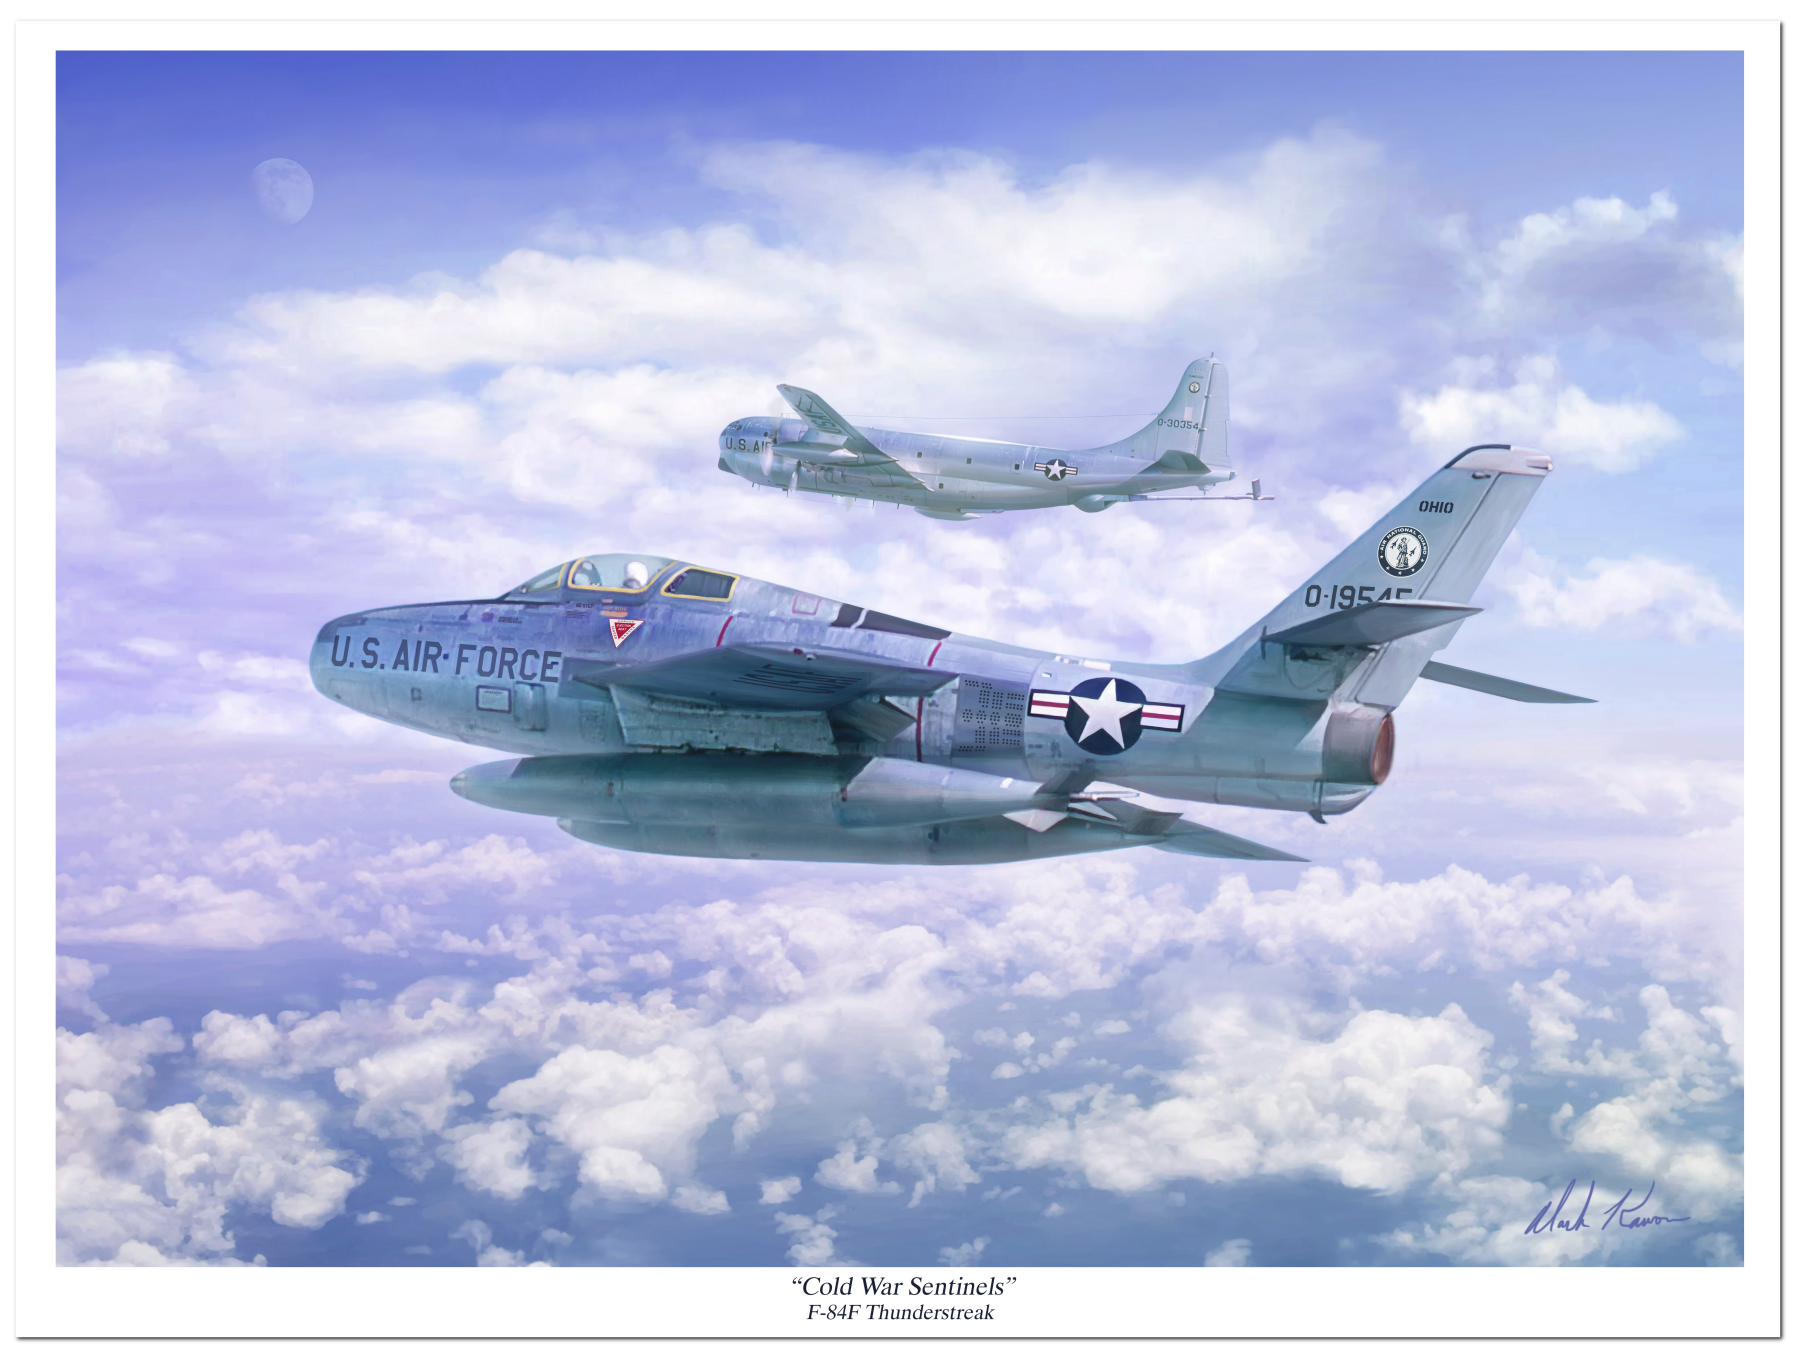 "Cold War Sentinels" by Mark Karvon featuring the USAF F-84F Thunderstreak